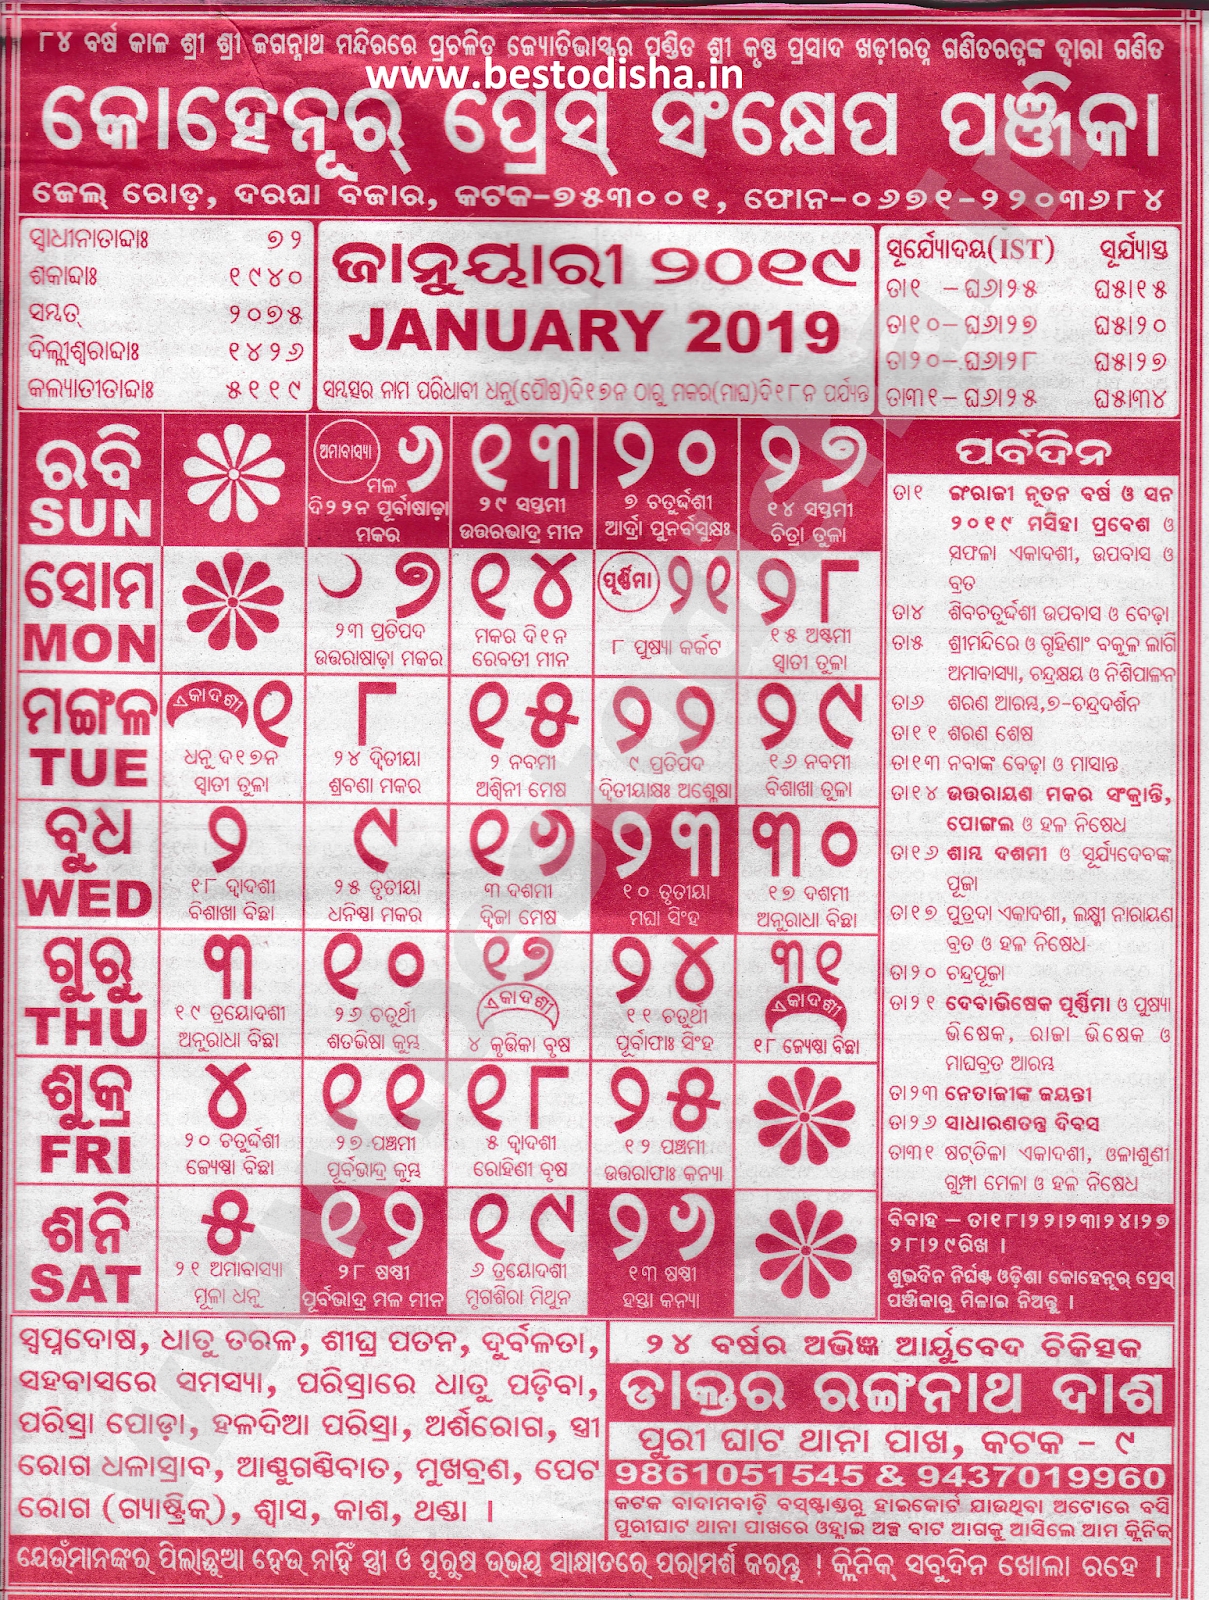 Best Odisha: Kohinoor Odia Calendar 2019 Pdf Download Here-Odia Kohinoor Calendar 2020 January